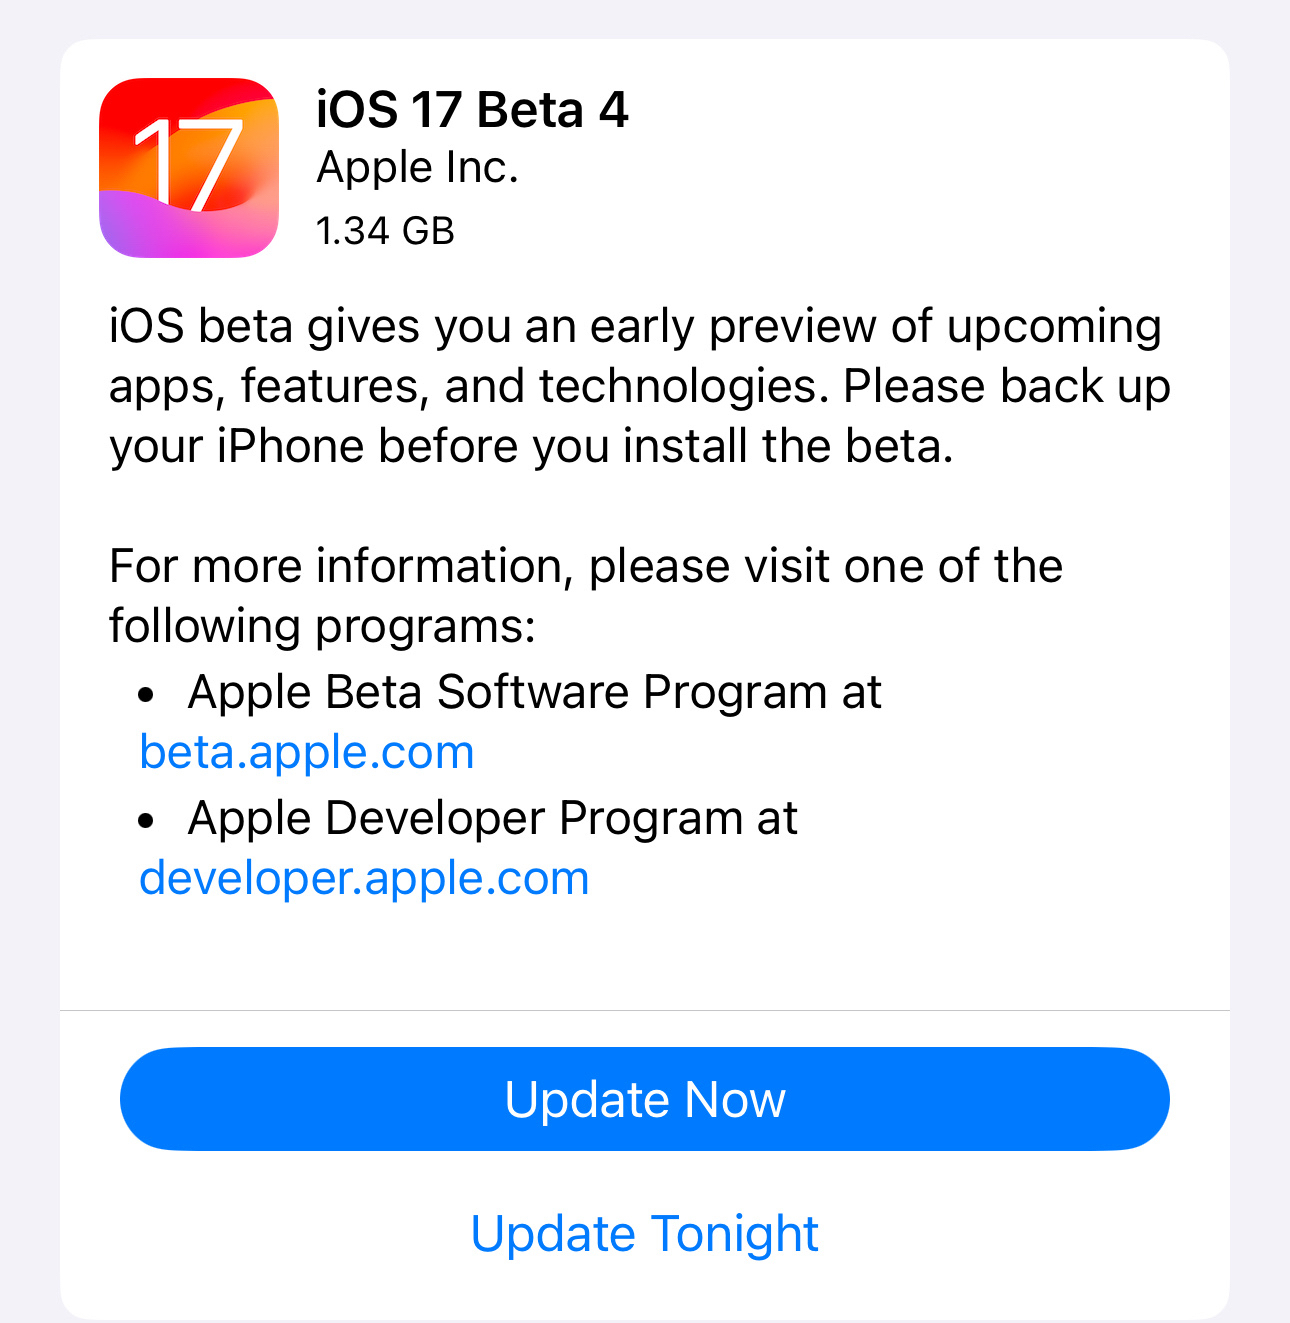 Screenshot of iOS 17 beta 4 update